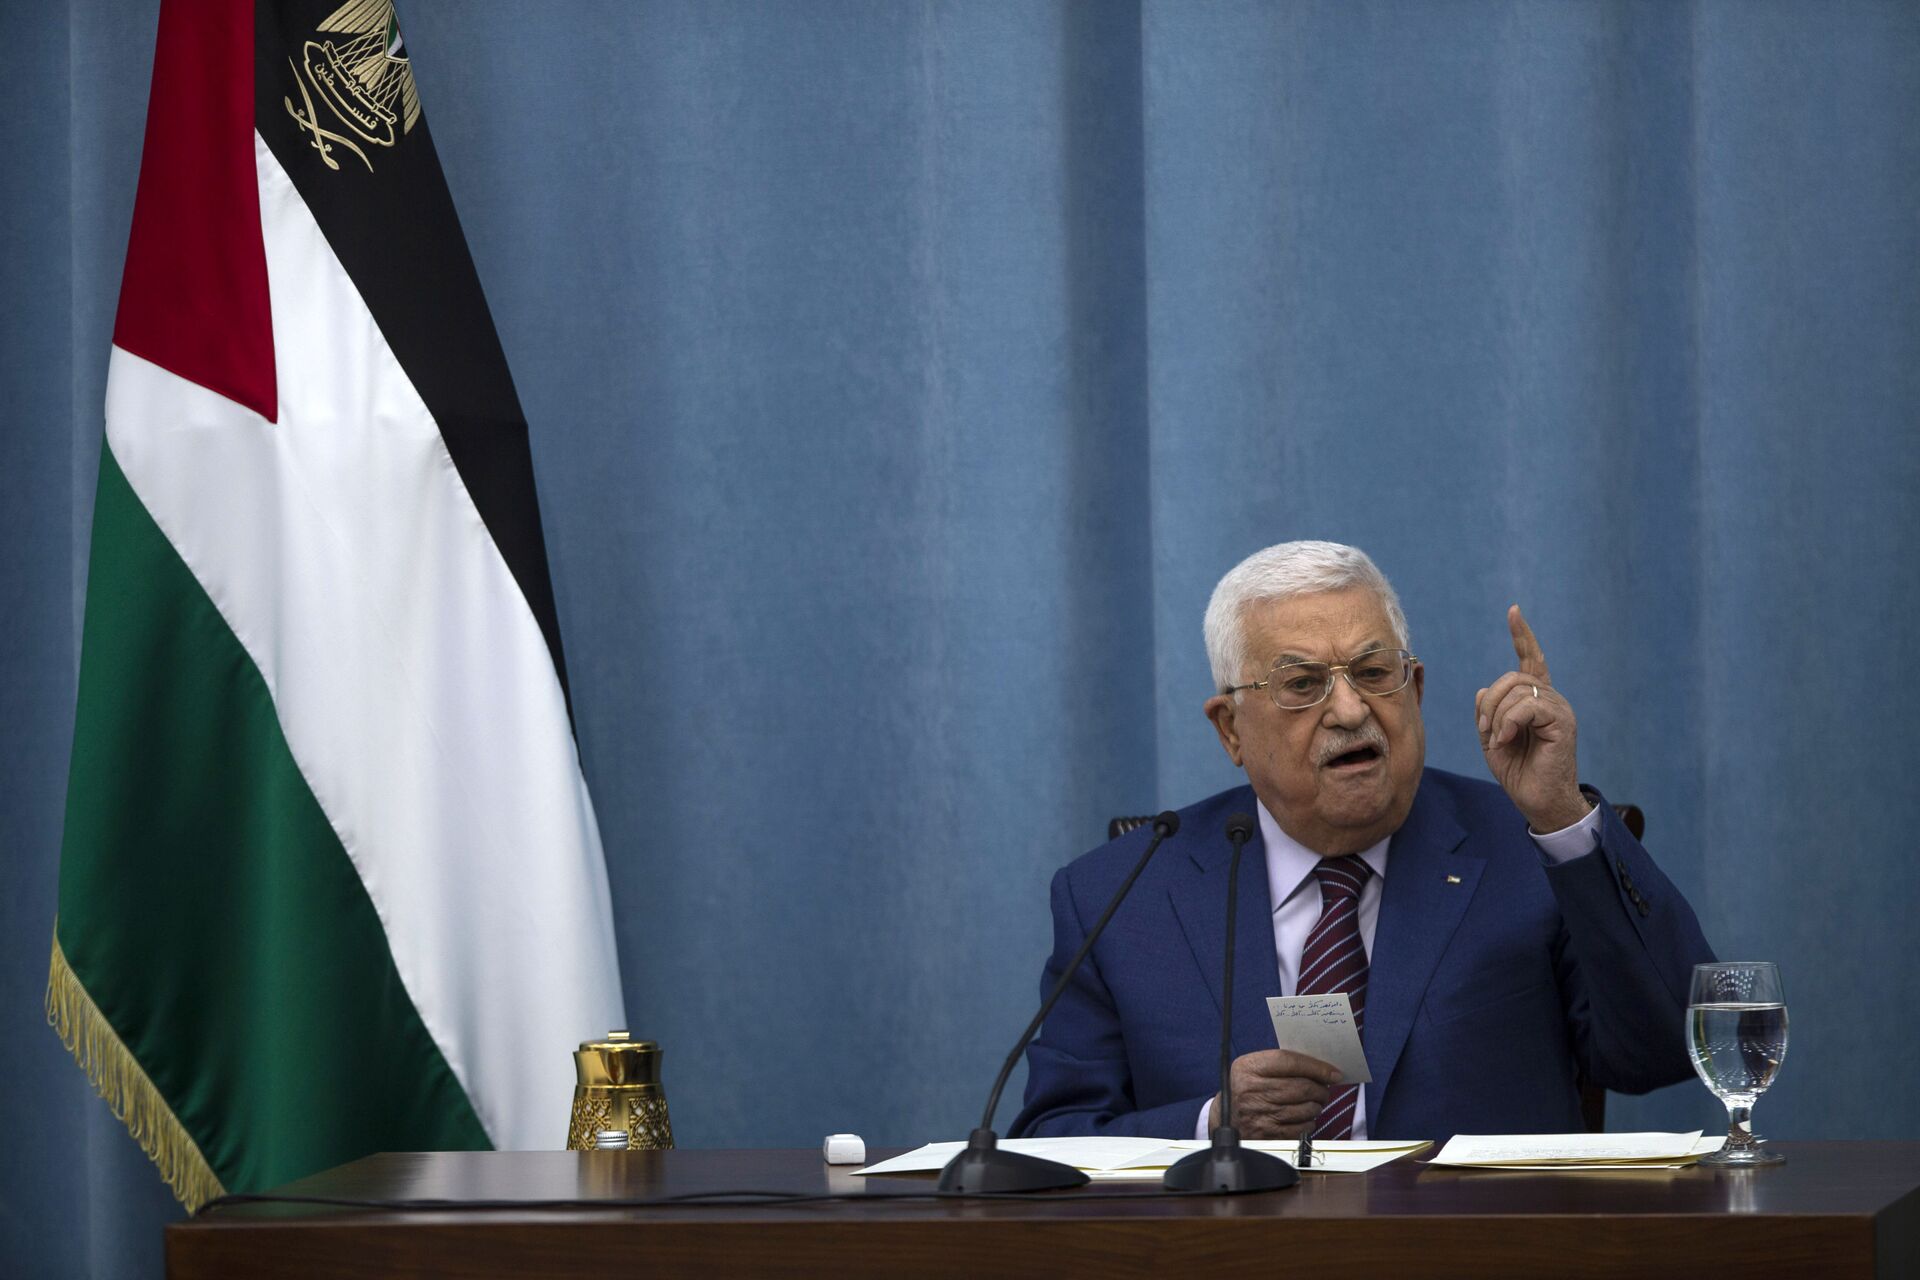 Palestinian President Abbas Pledges Cooperation With Bennett if Israel ‘Stops Aggression’ - Sputnik International, 1920, 24.06.2021